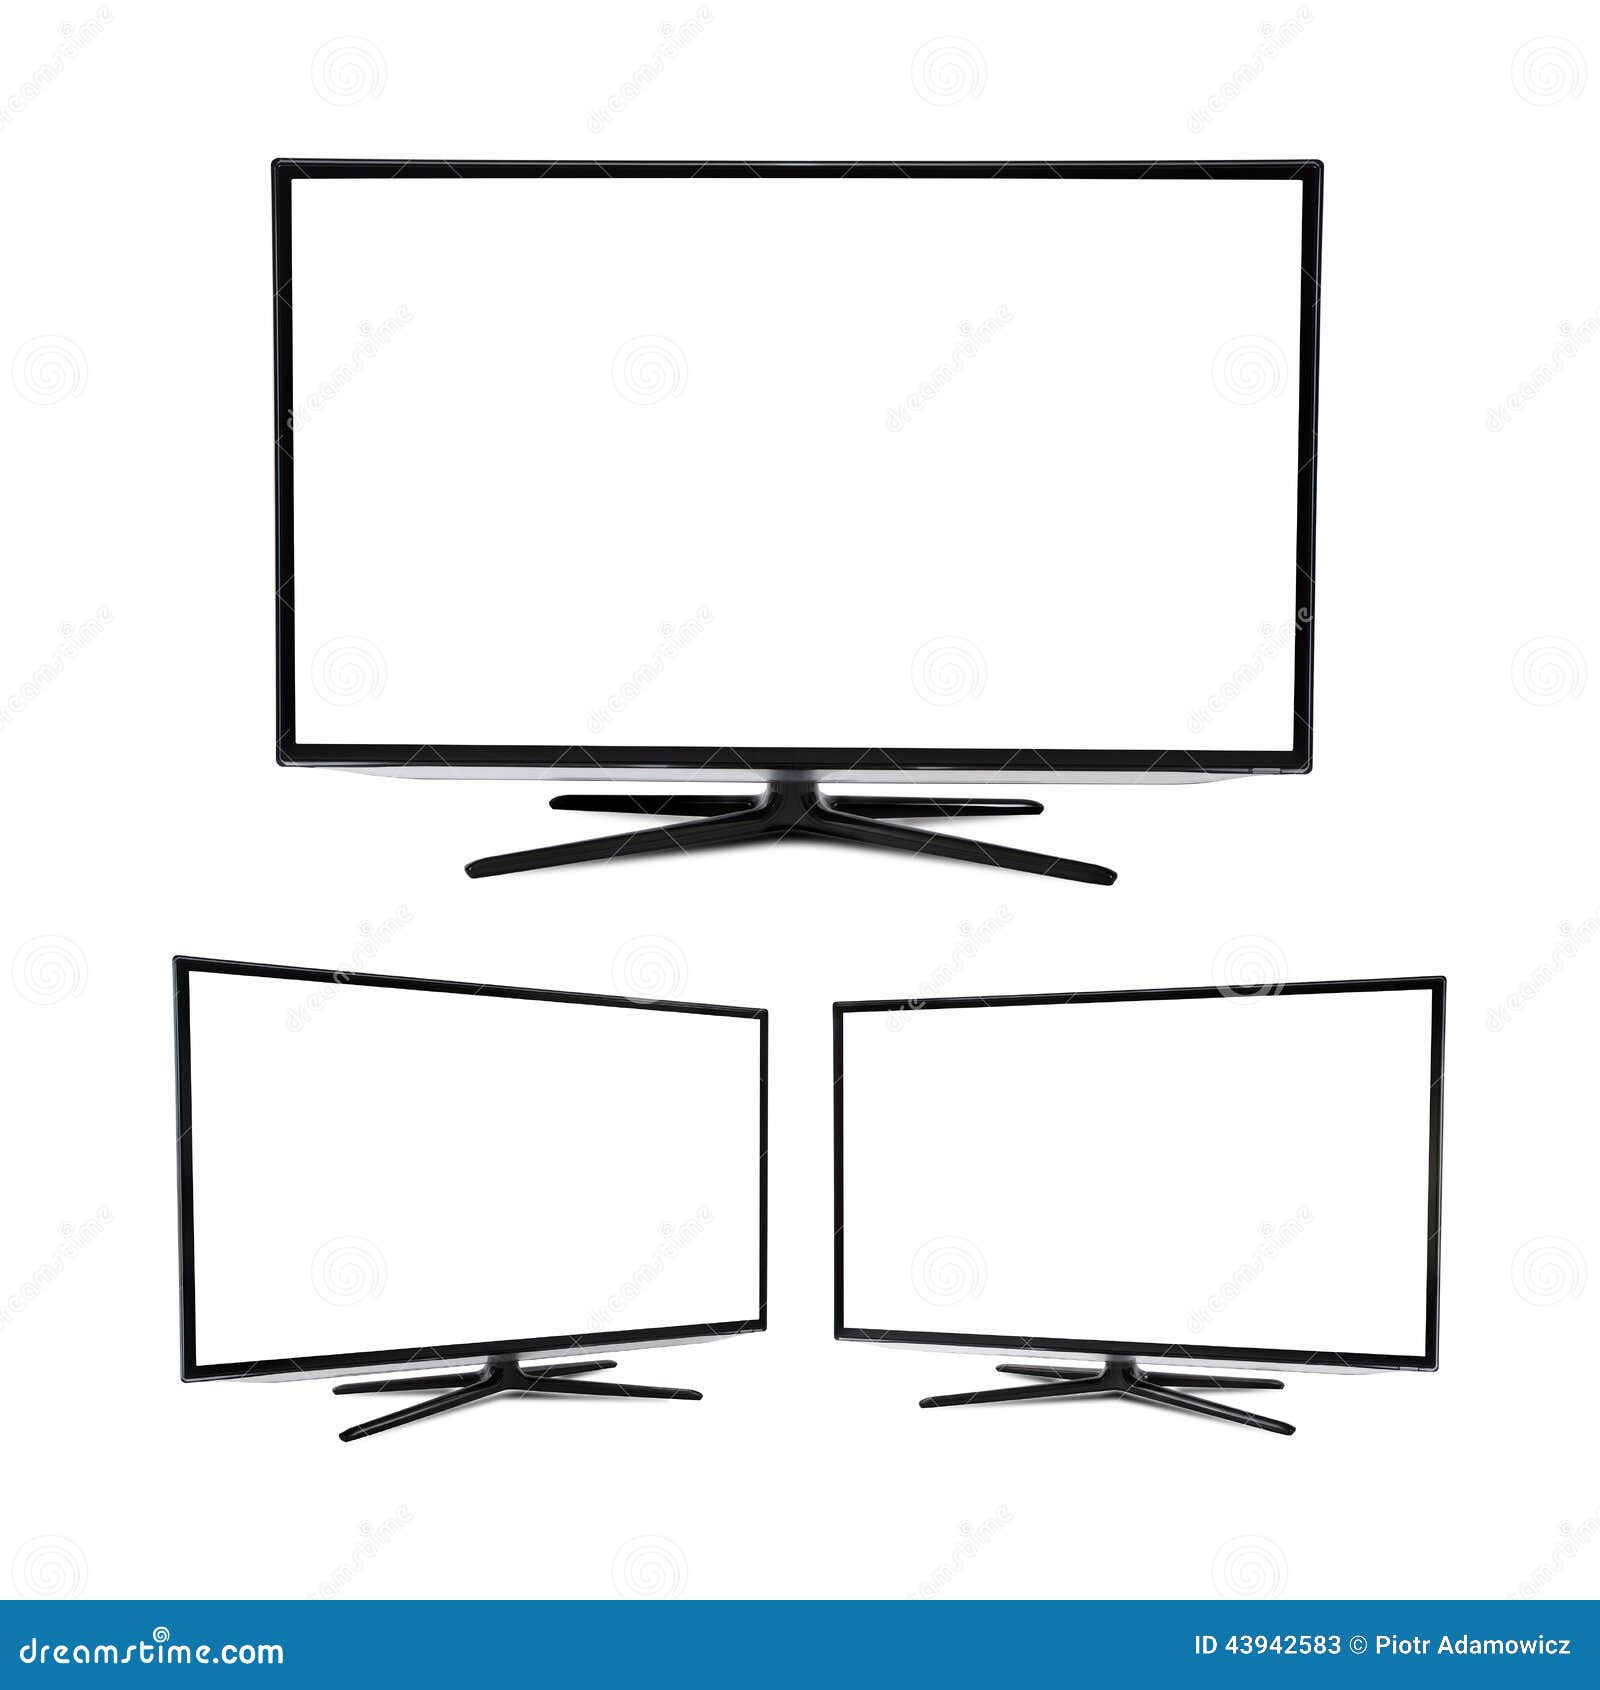 100 Flat Screen Tvs Drawing Illustrations RoyaltyFree Vector Graphics   Clip Art  iStock